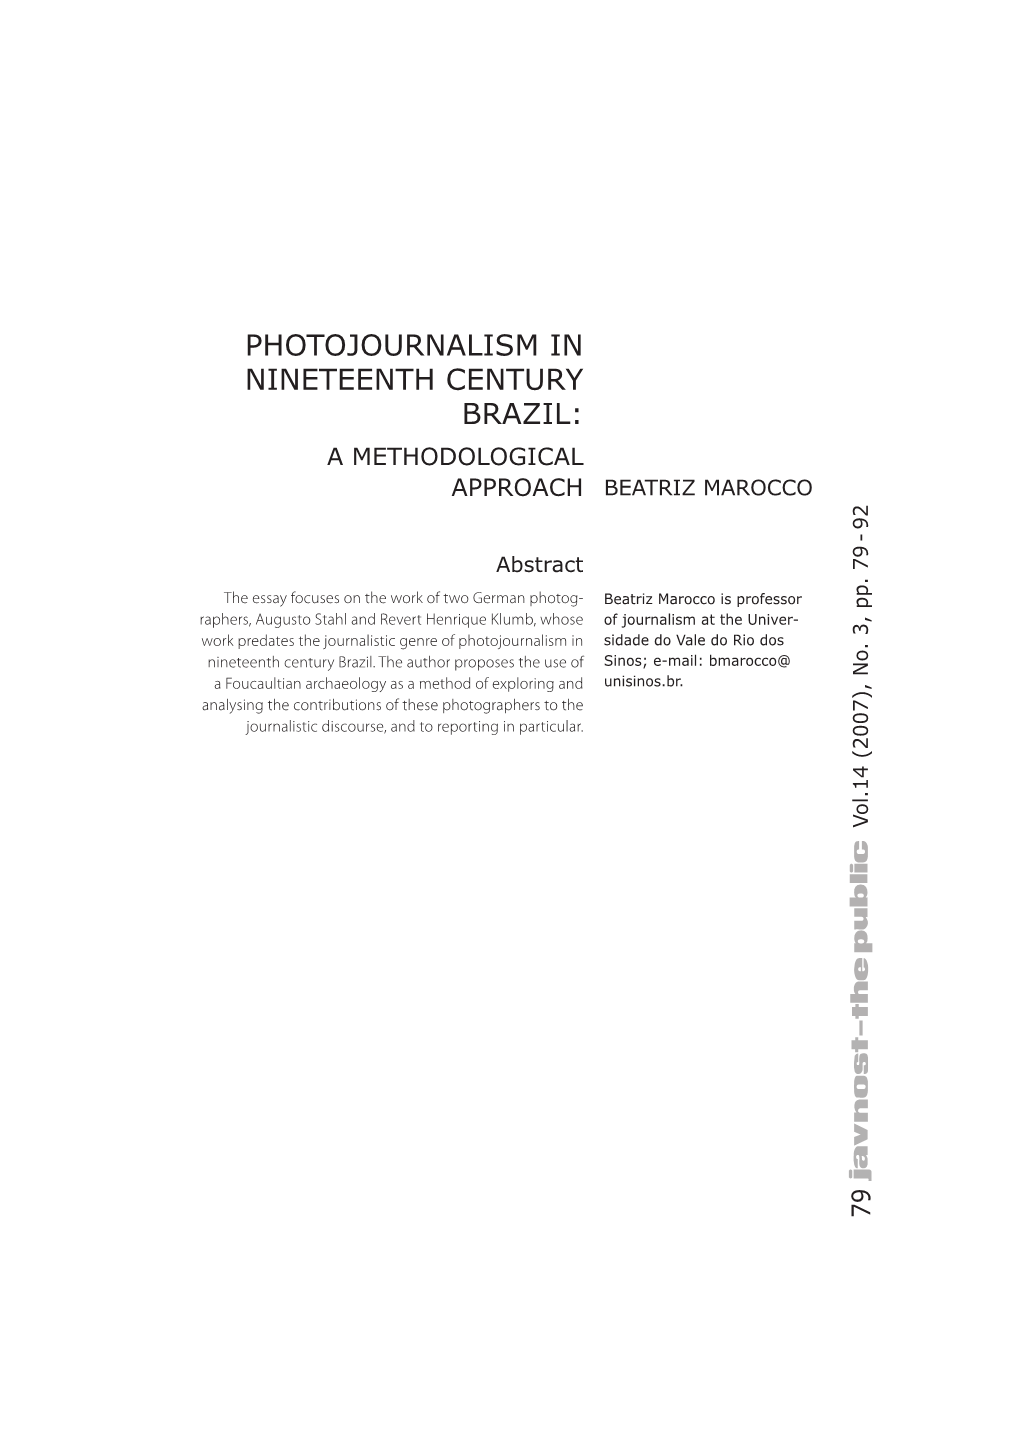 Photojournalism in Nineteenth Century Brazil